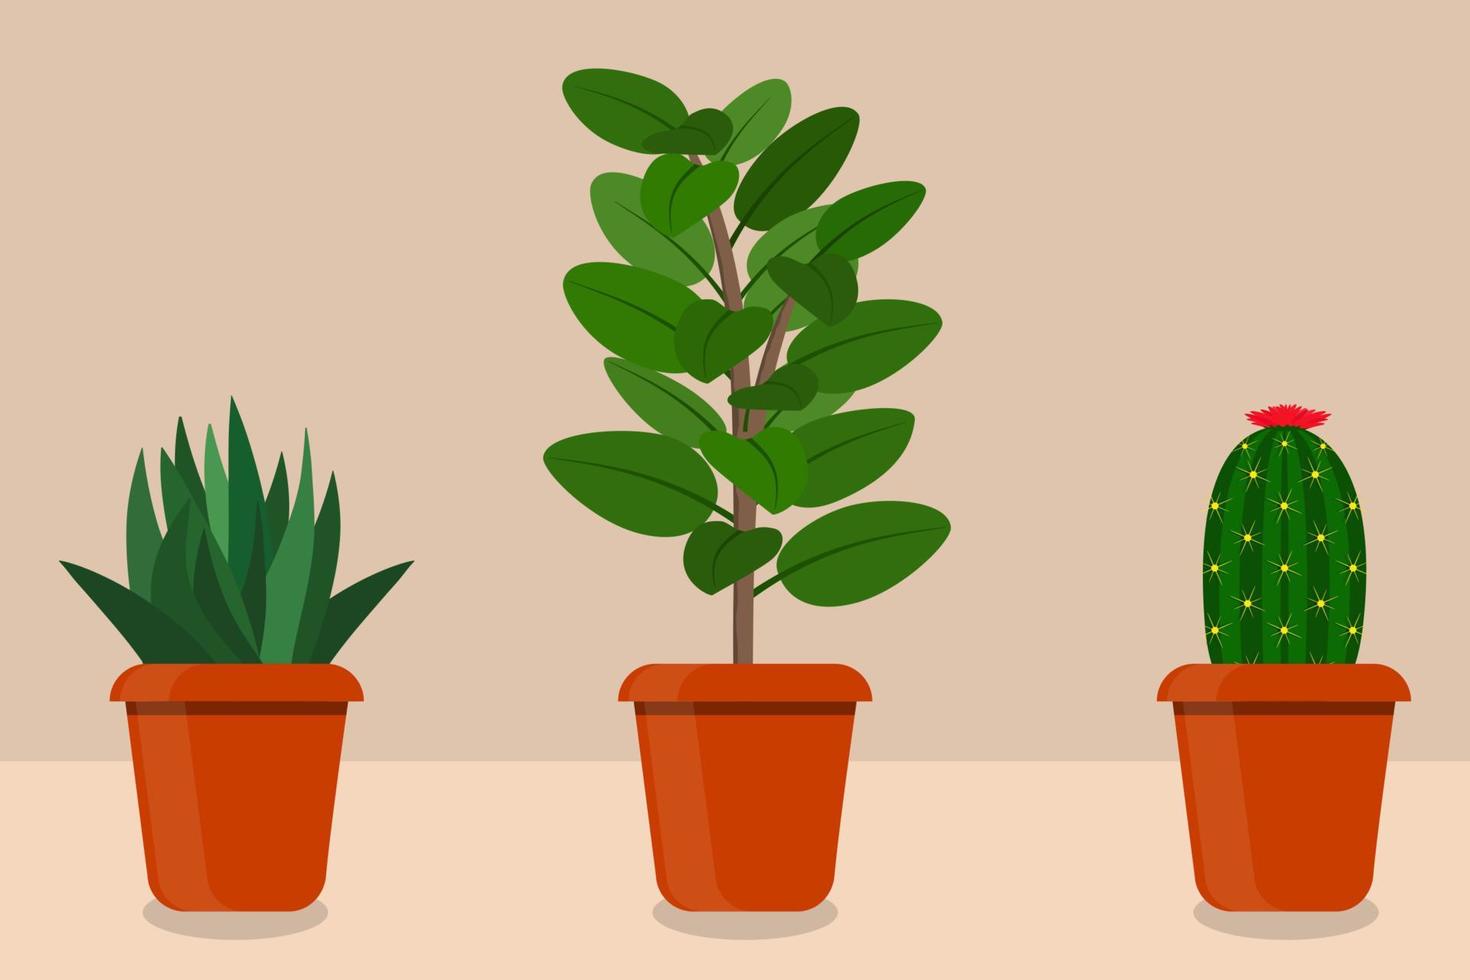 Flat style room plants in pots, vector illustration. Cactus, aloe vera, ficus.